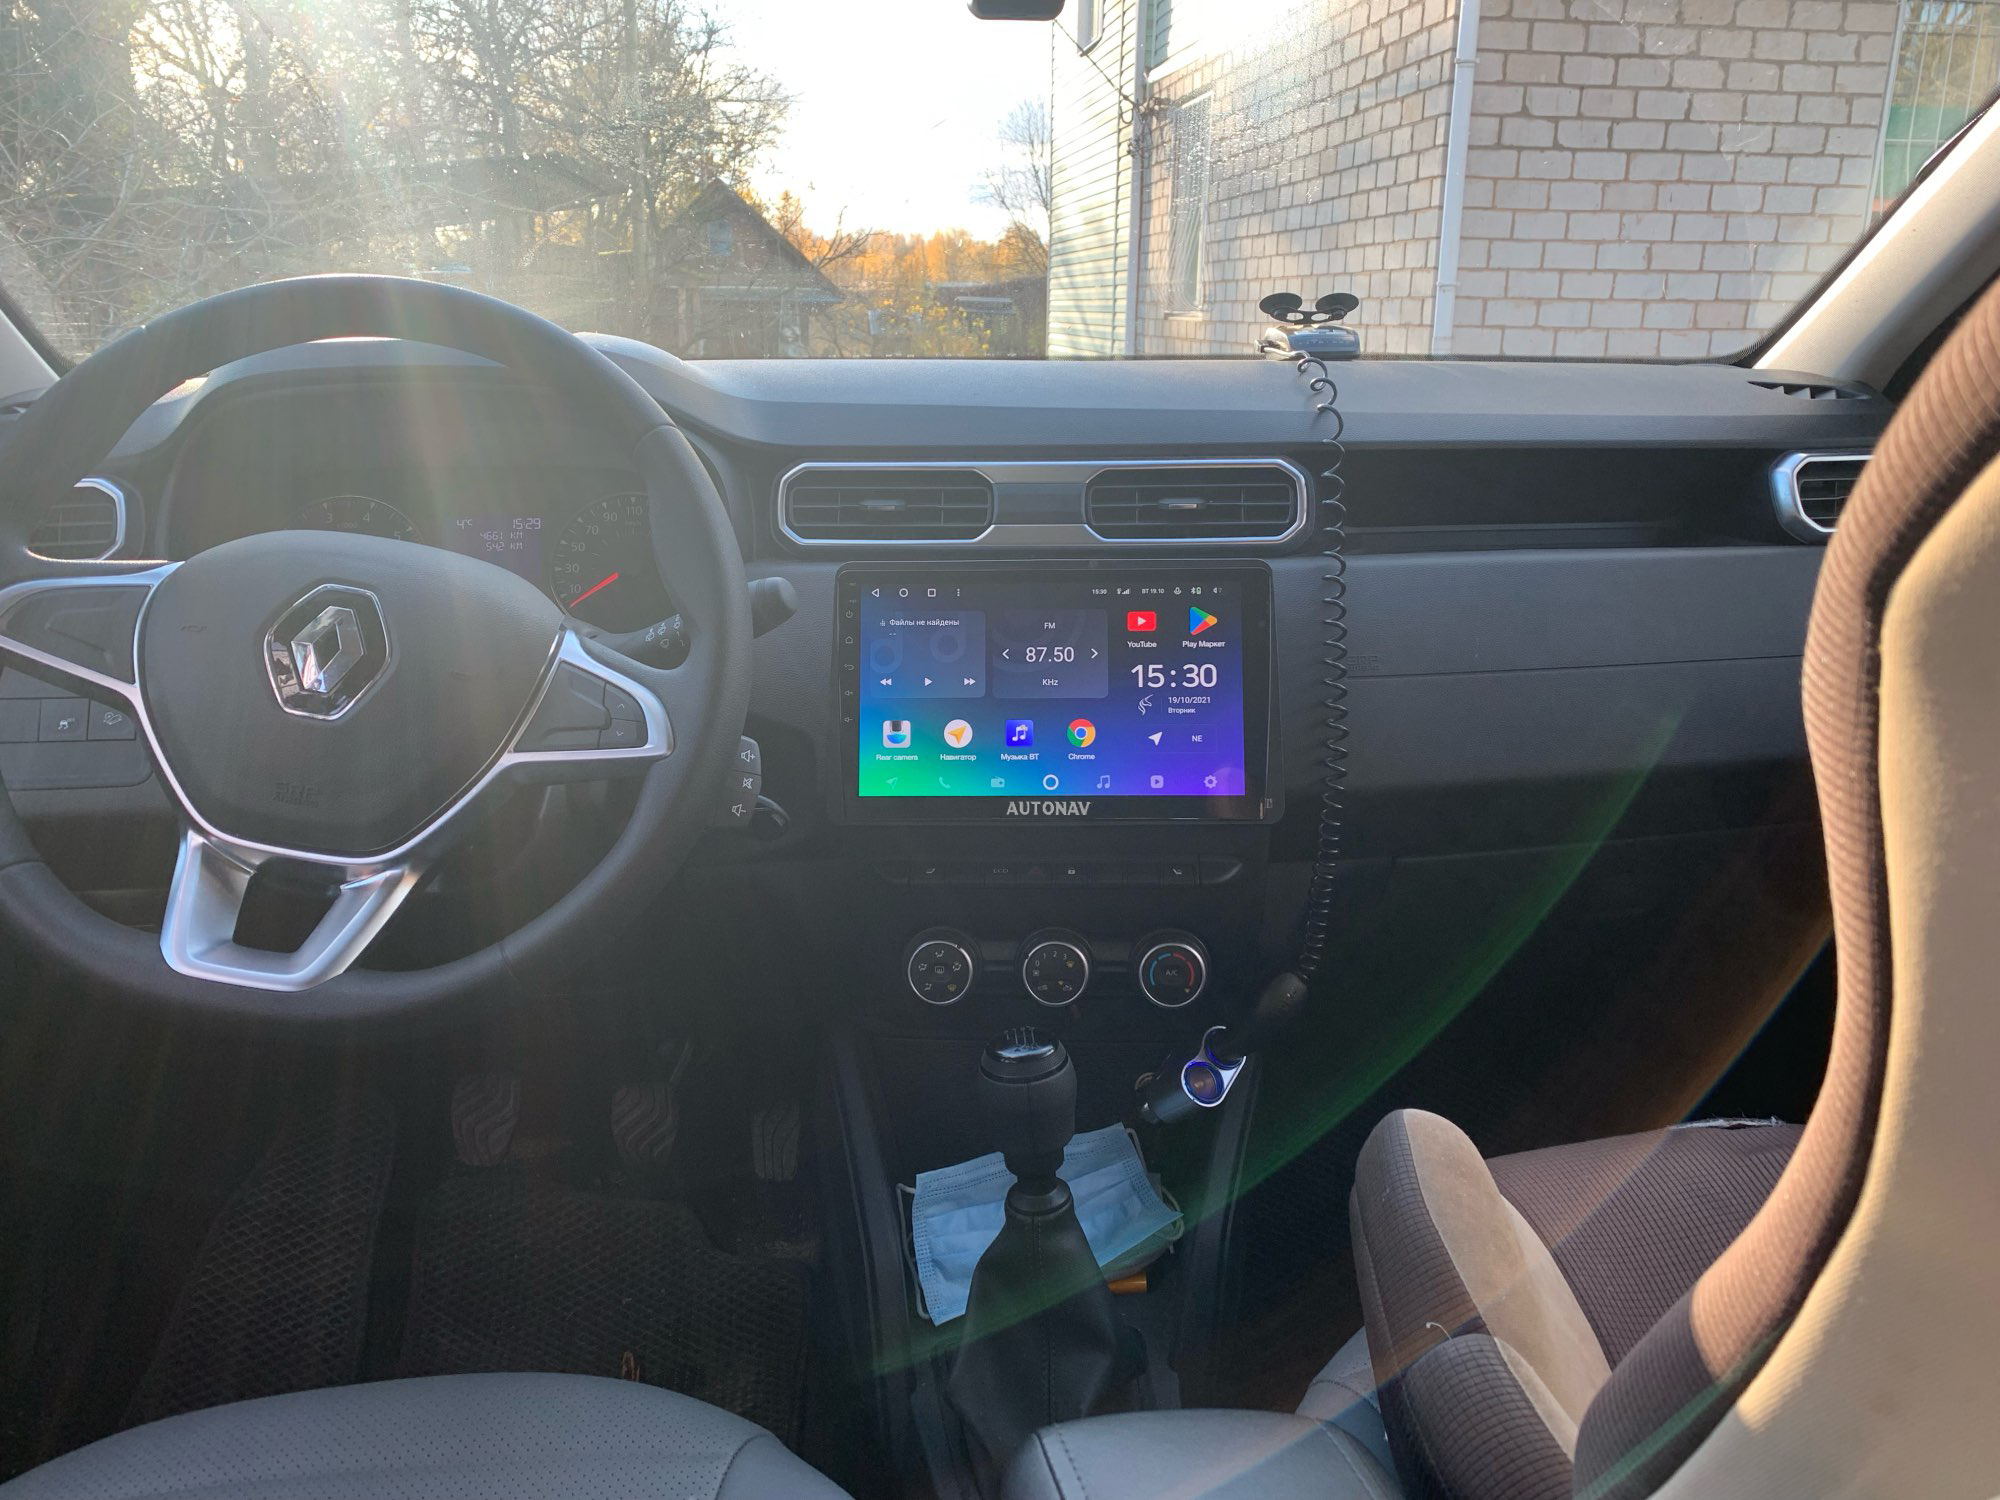 Navigatie AUTONAV Android GPS Dedicata Dacia Duster Dupa 2020, Model Classic, Memorie 64GB Stocare, 4GB DDR3 RAM, Display 10" Full-Touch, WiFi, 2 x USB, Bluetooth, 4G, Octa-Core 8 * 1.3GHz, 4 * 50W Audio